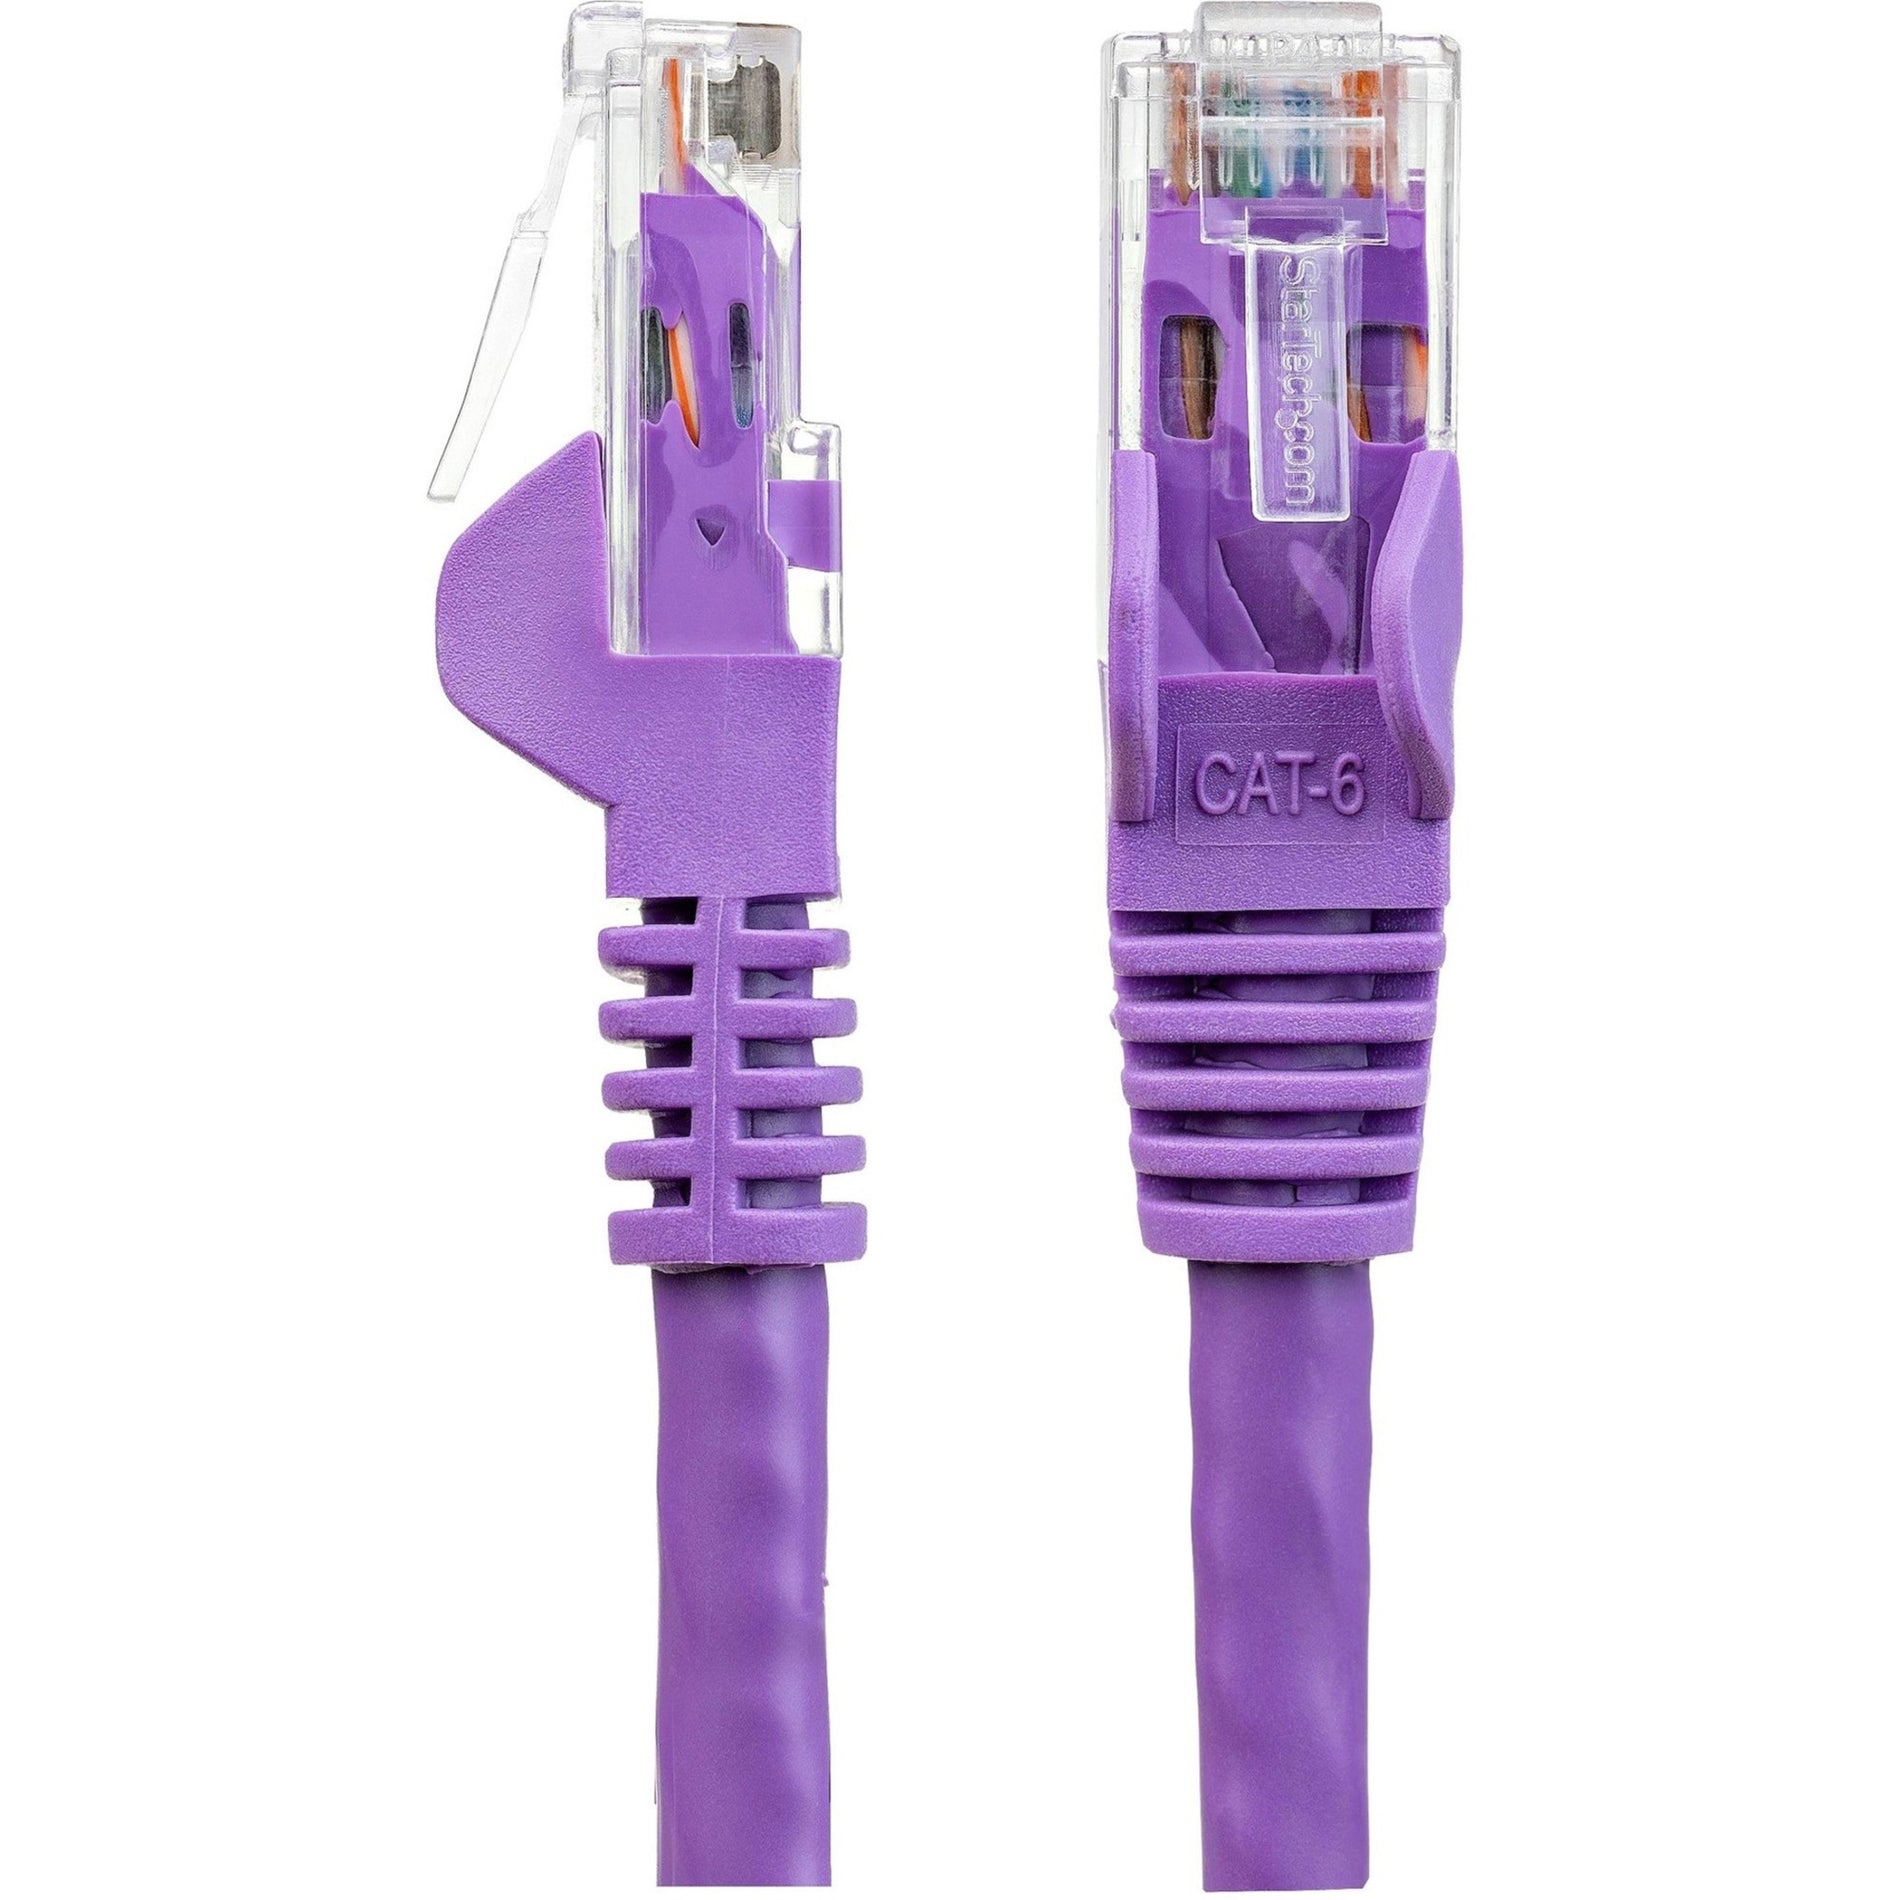 StarTech.com N6PATCH125PL Cat6 Patch Cable, 125ft Purple Ethernet Cable with Snagless RJ45 Connectors